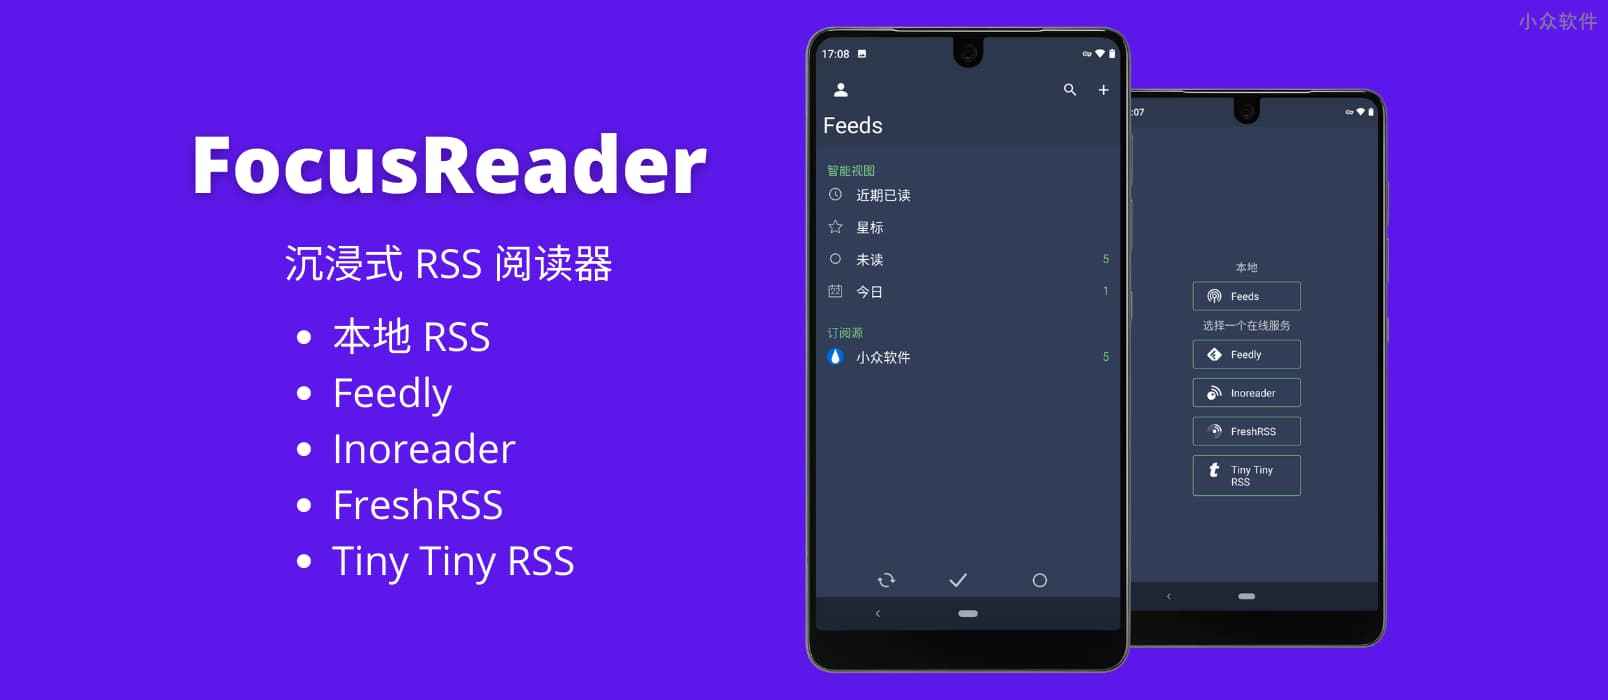 FocusReader 已支持本地 RSS、Feedly 等 5 种订阅源，沉浸式 RSS 阅读器[Android] 1